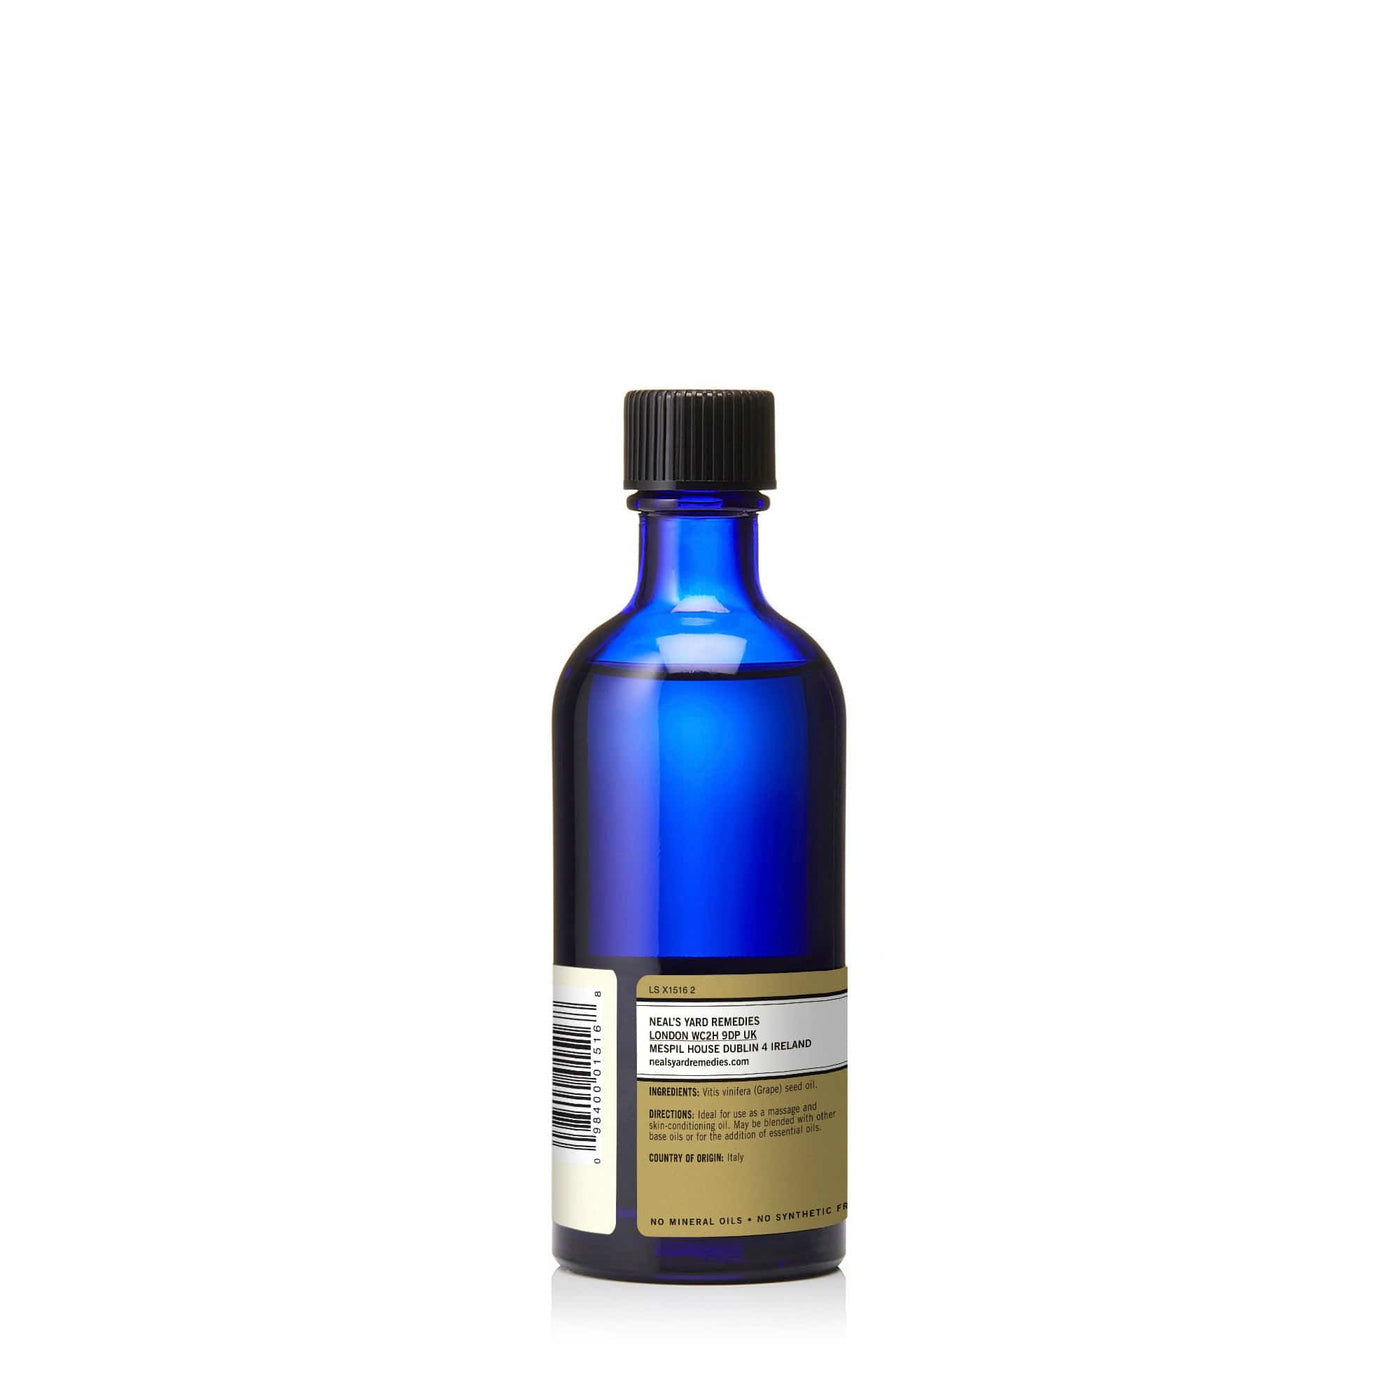 Neal's Yard Remedies Aromatherapy Grapeseed Oil 3.38 fl. oz